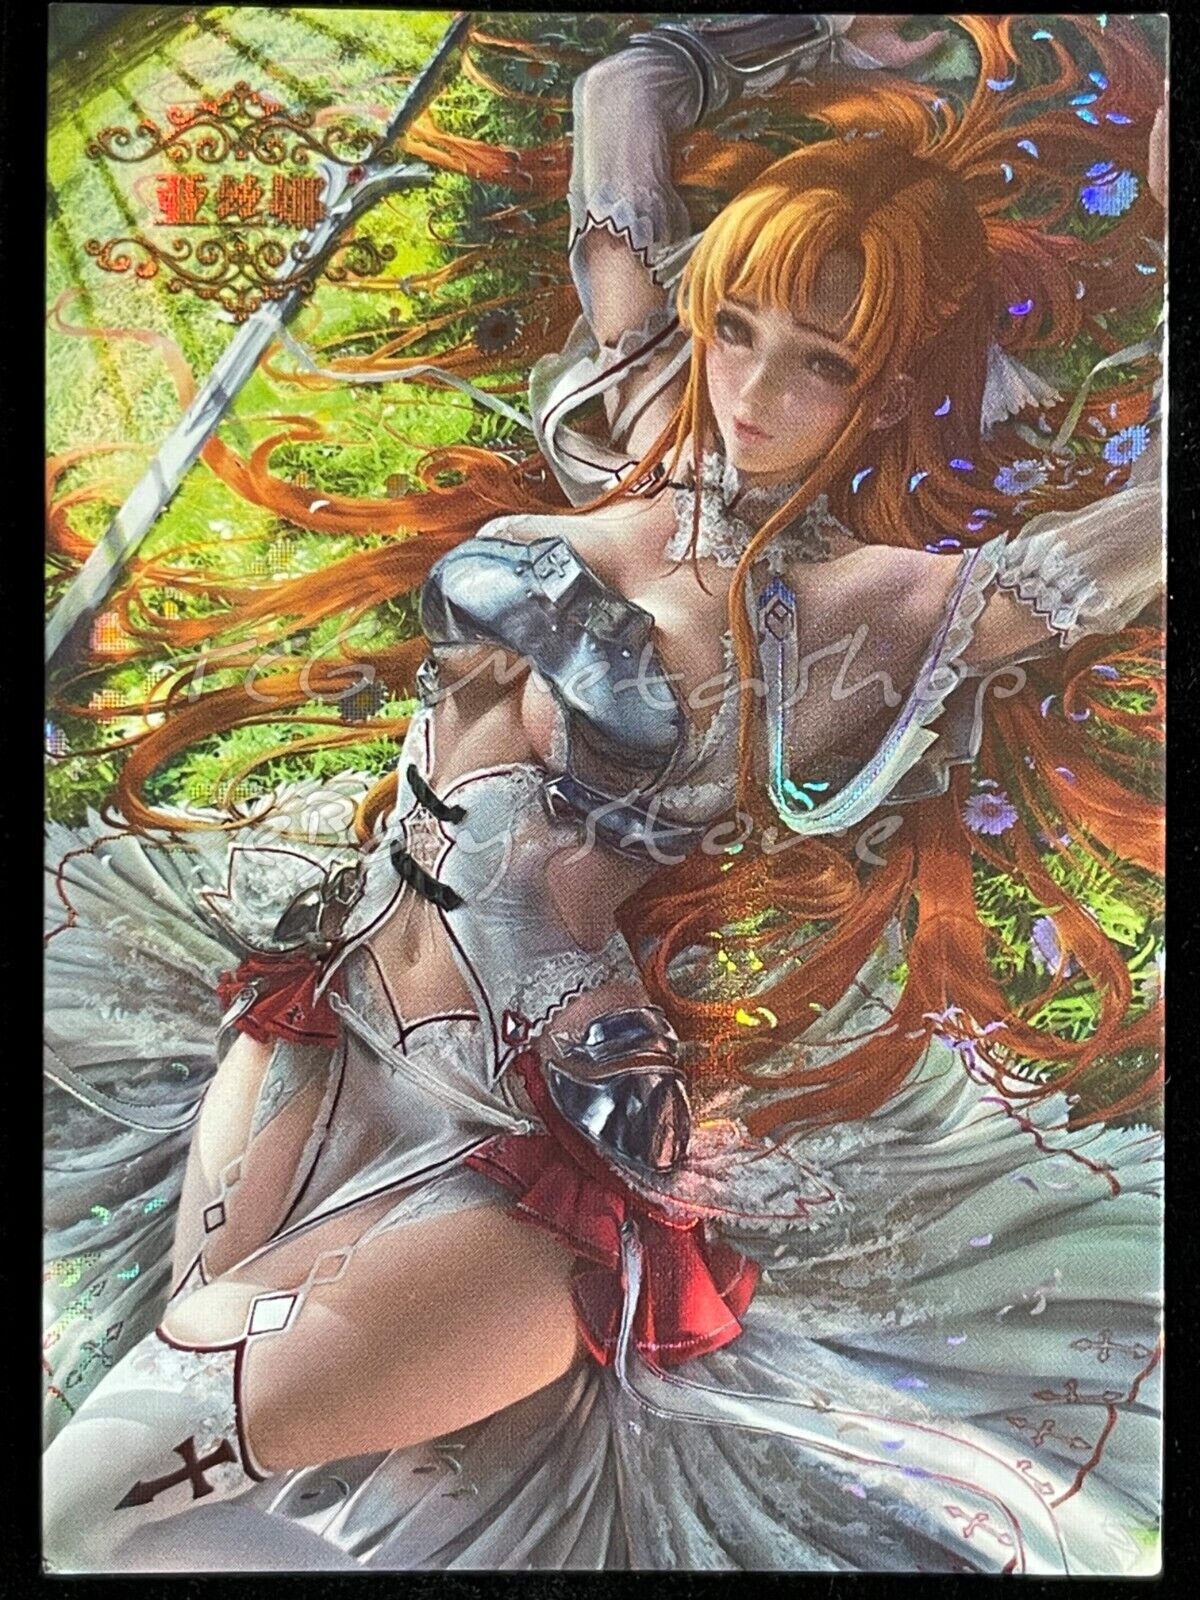 🔥 ACG-SAC [Pick your card Pegasus 1 - 29] Goddess Story Anime Waifu Doujin 🔥